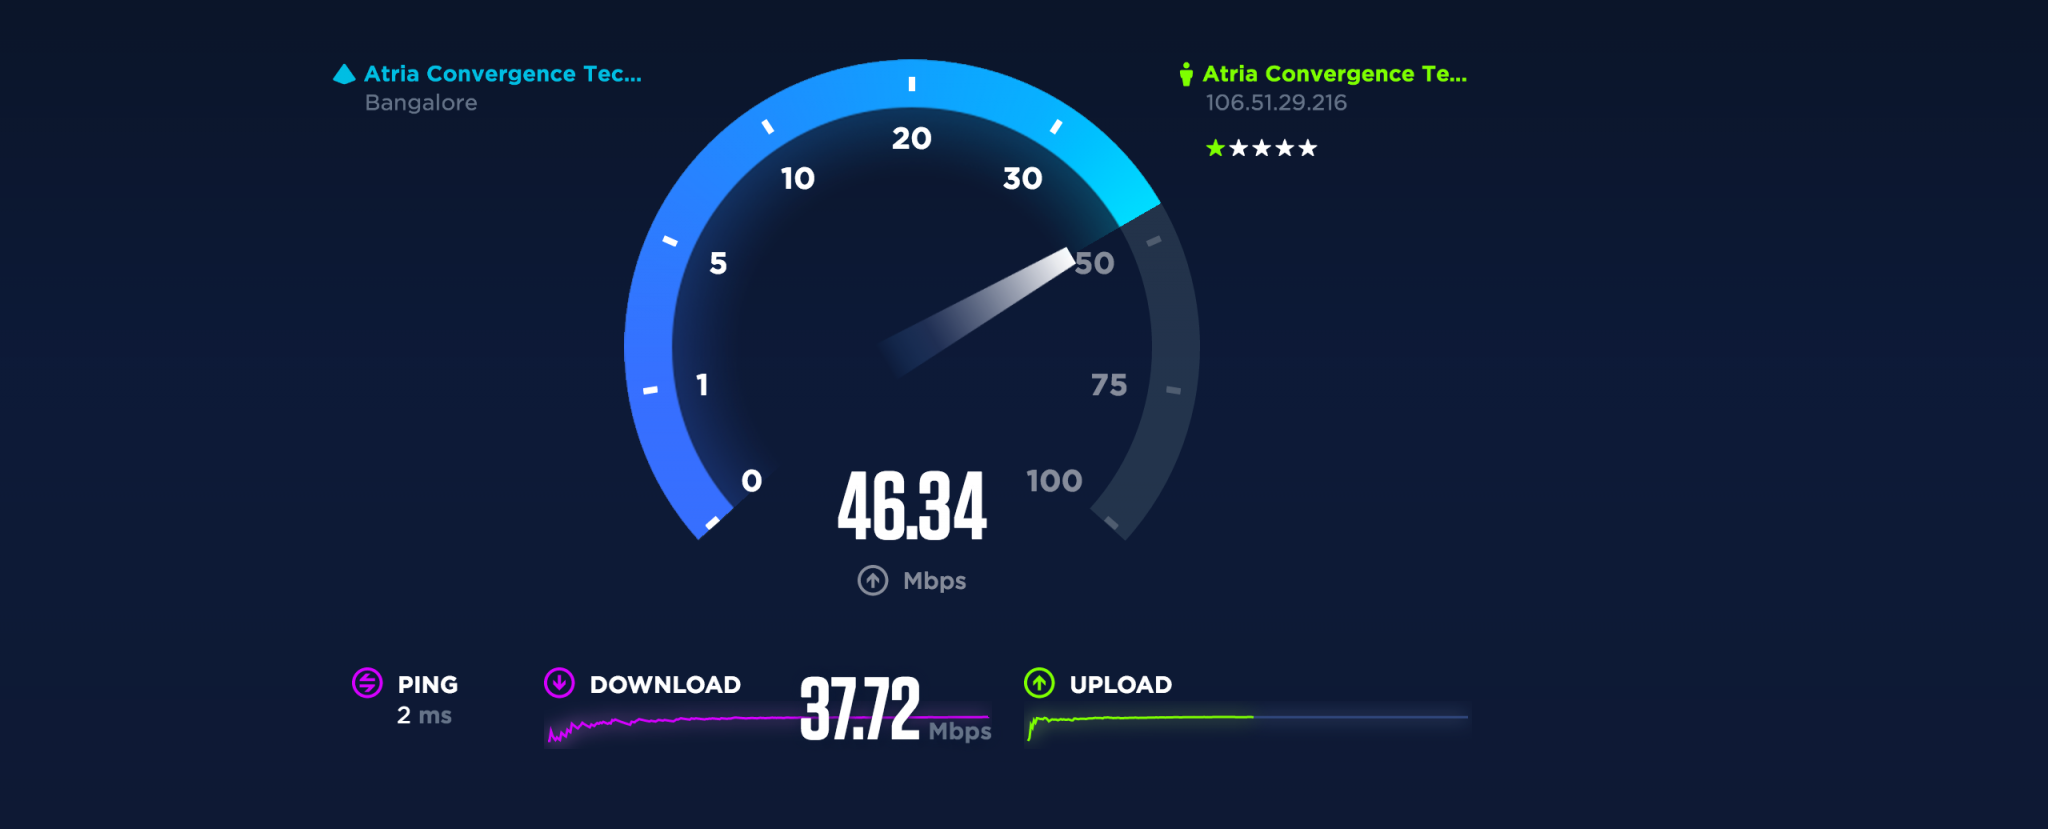 Скорость интернета. Тест скорости интернета. Спидтест скорости интернета. Низкая скорость интернета. Скорость интернета новая